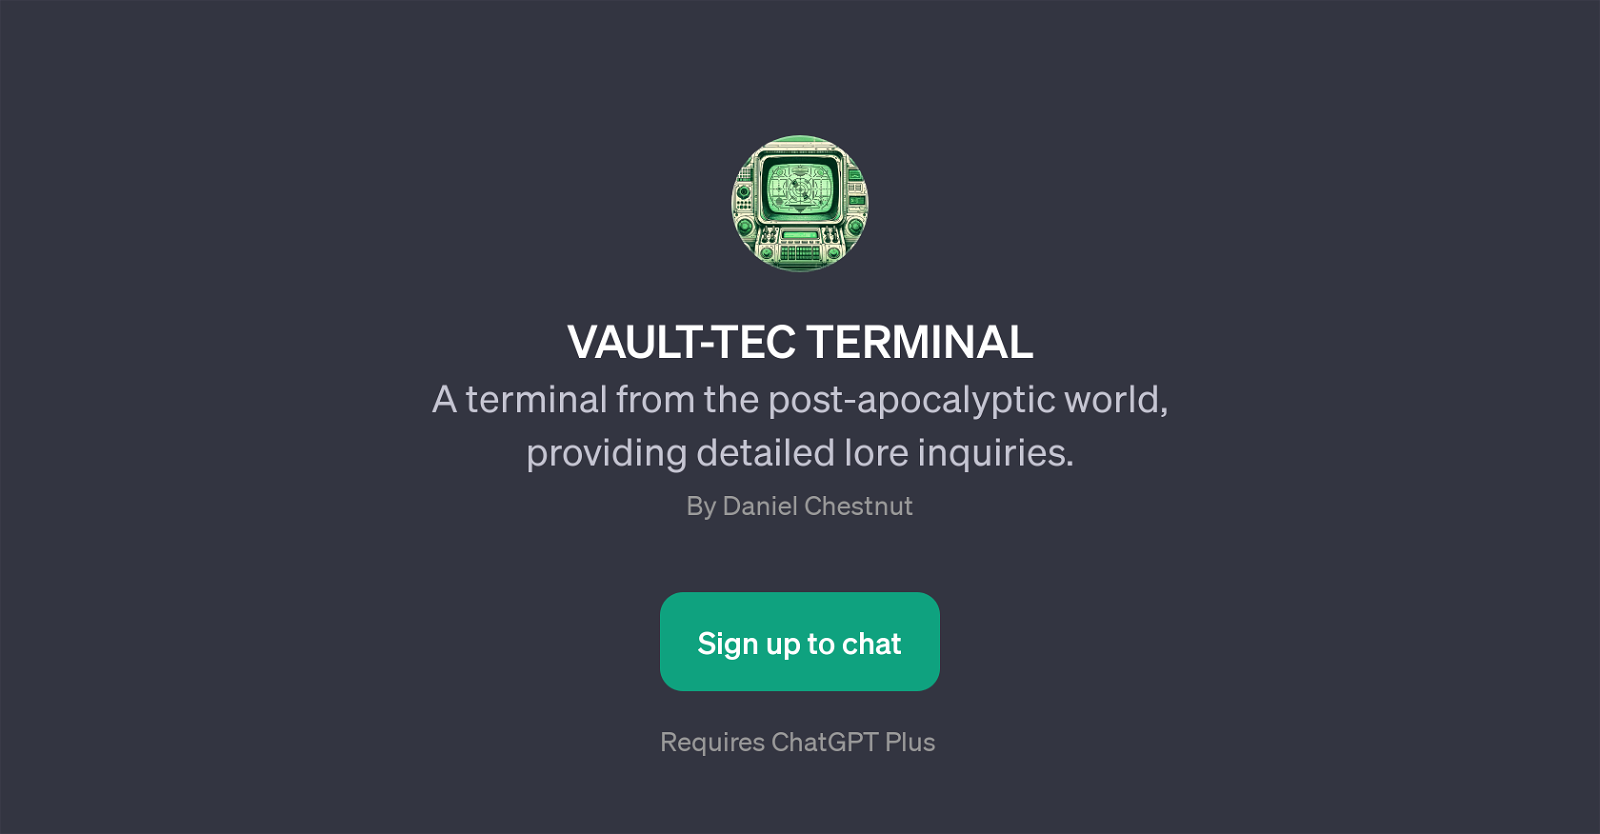 VAULT-TEC TERMINAL website